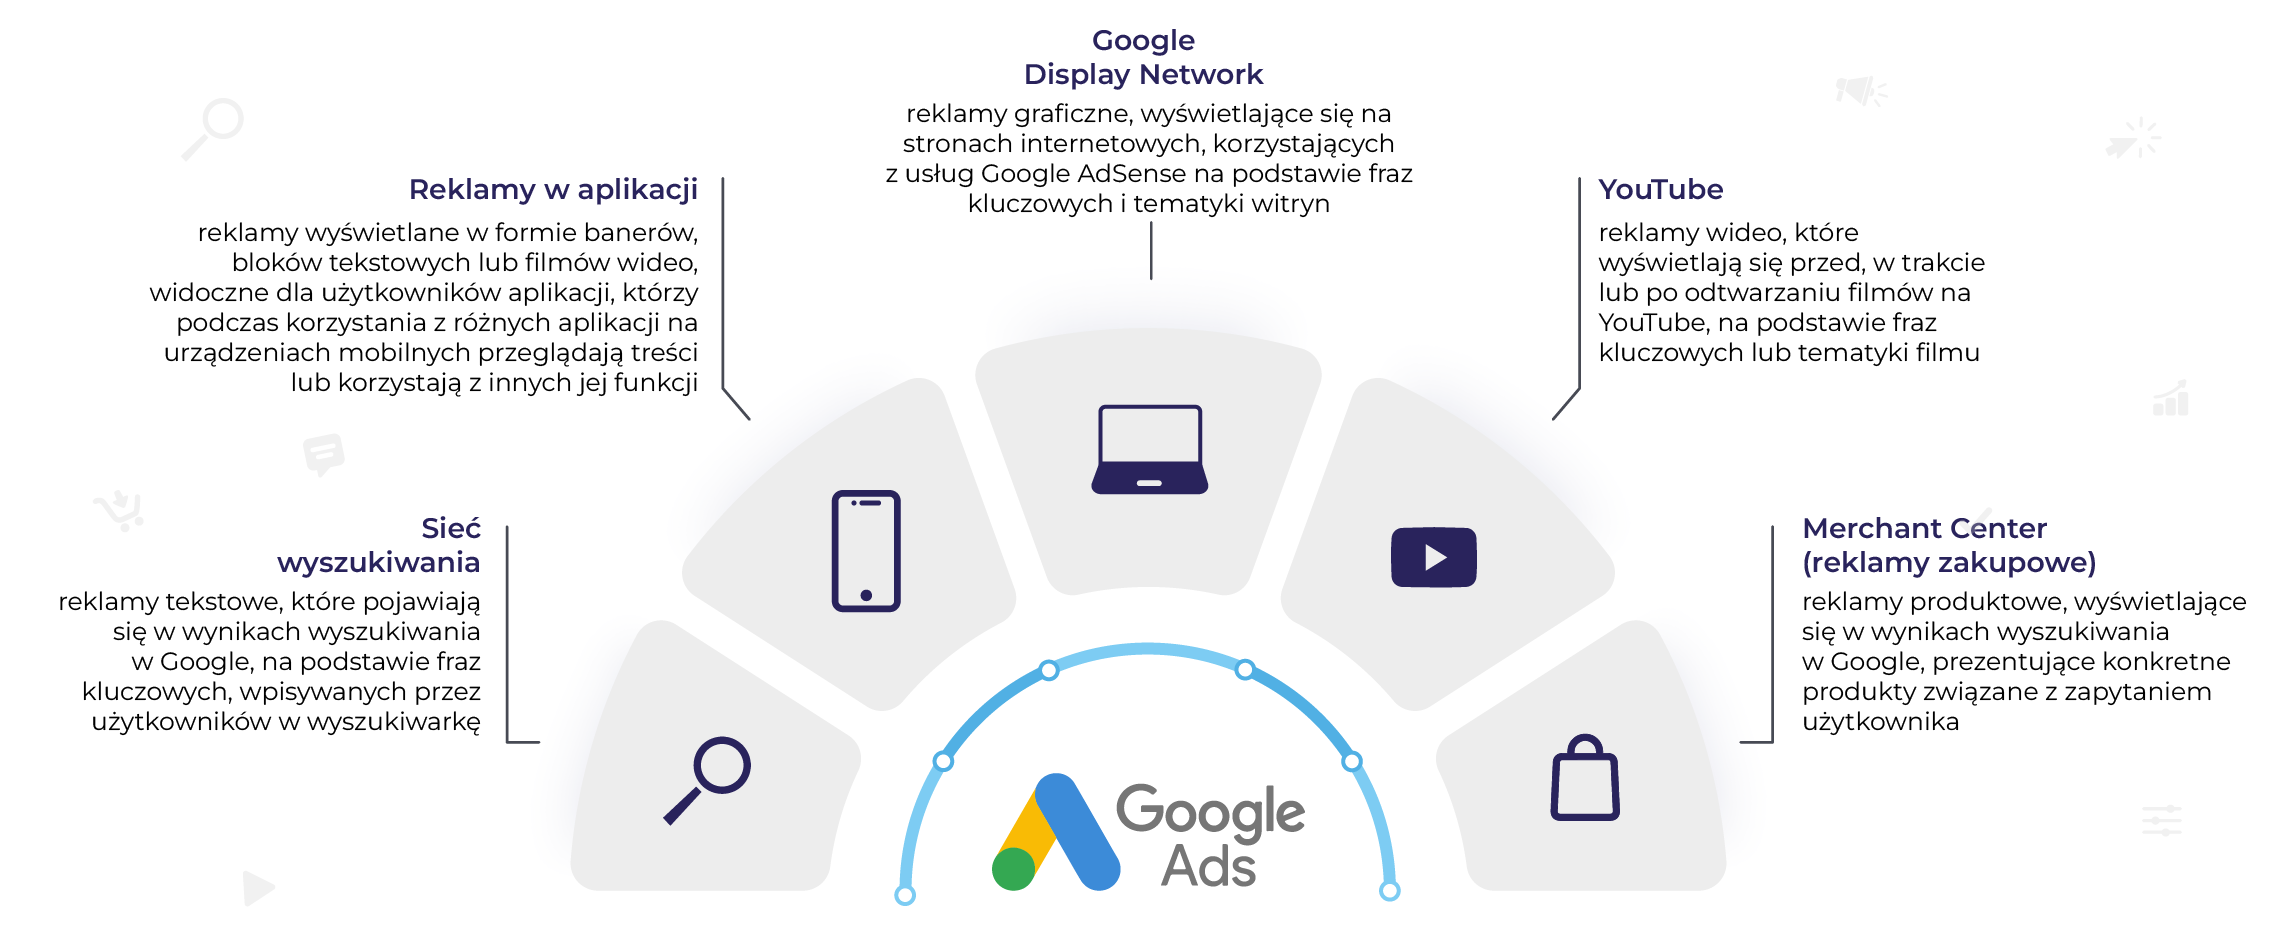 Google Ads diagram